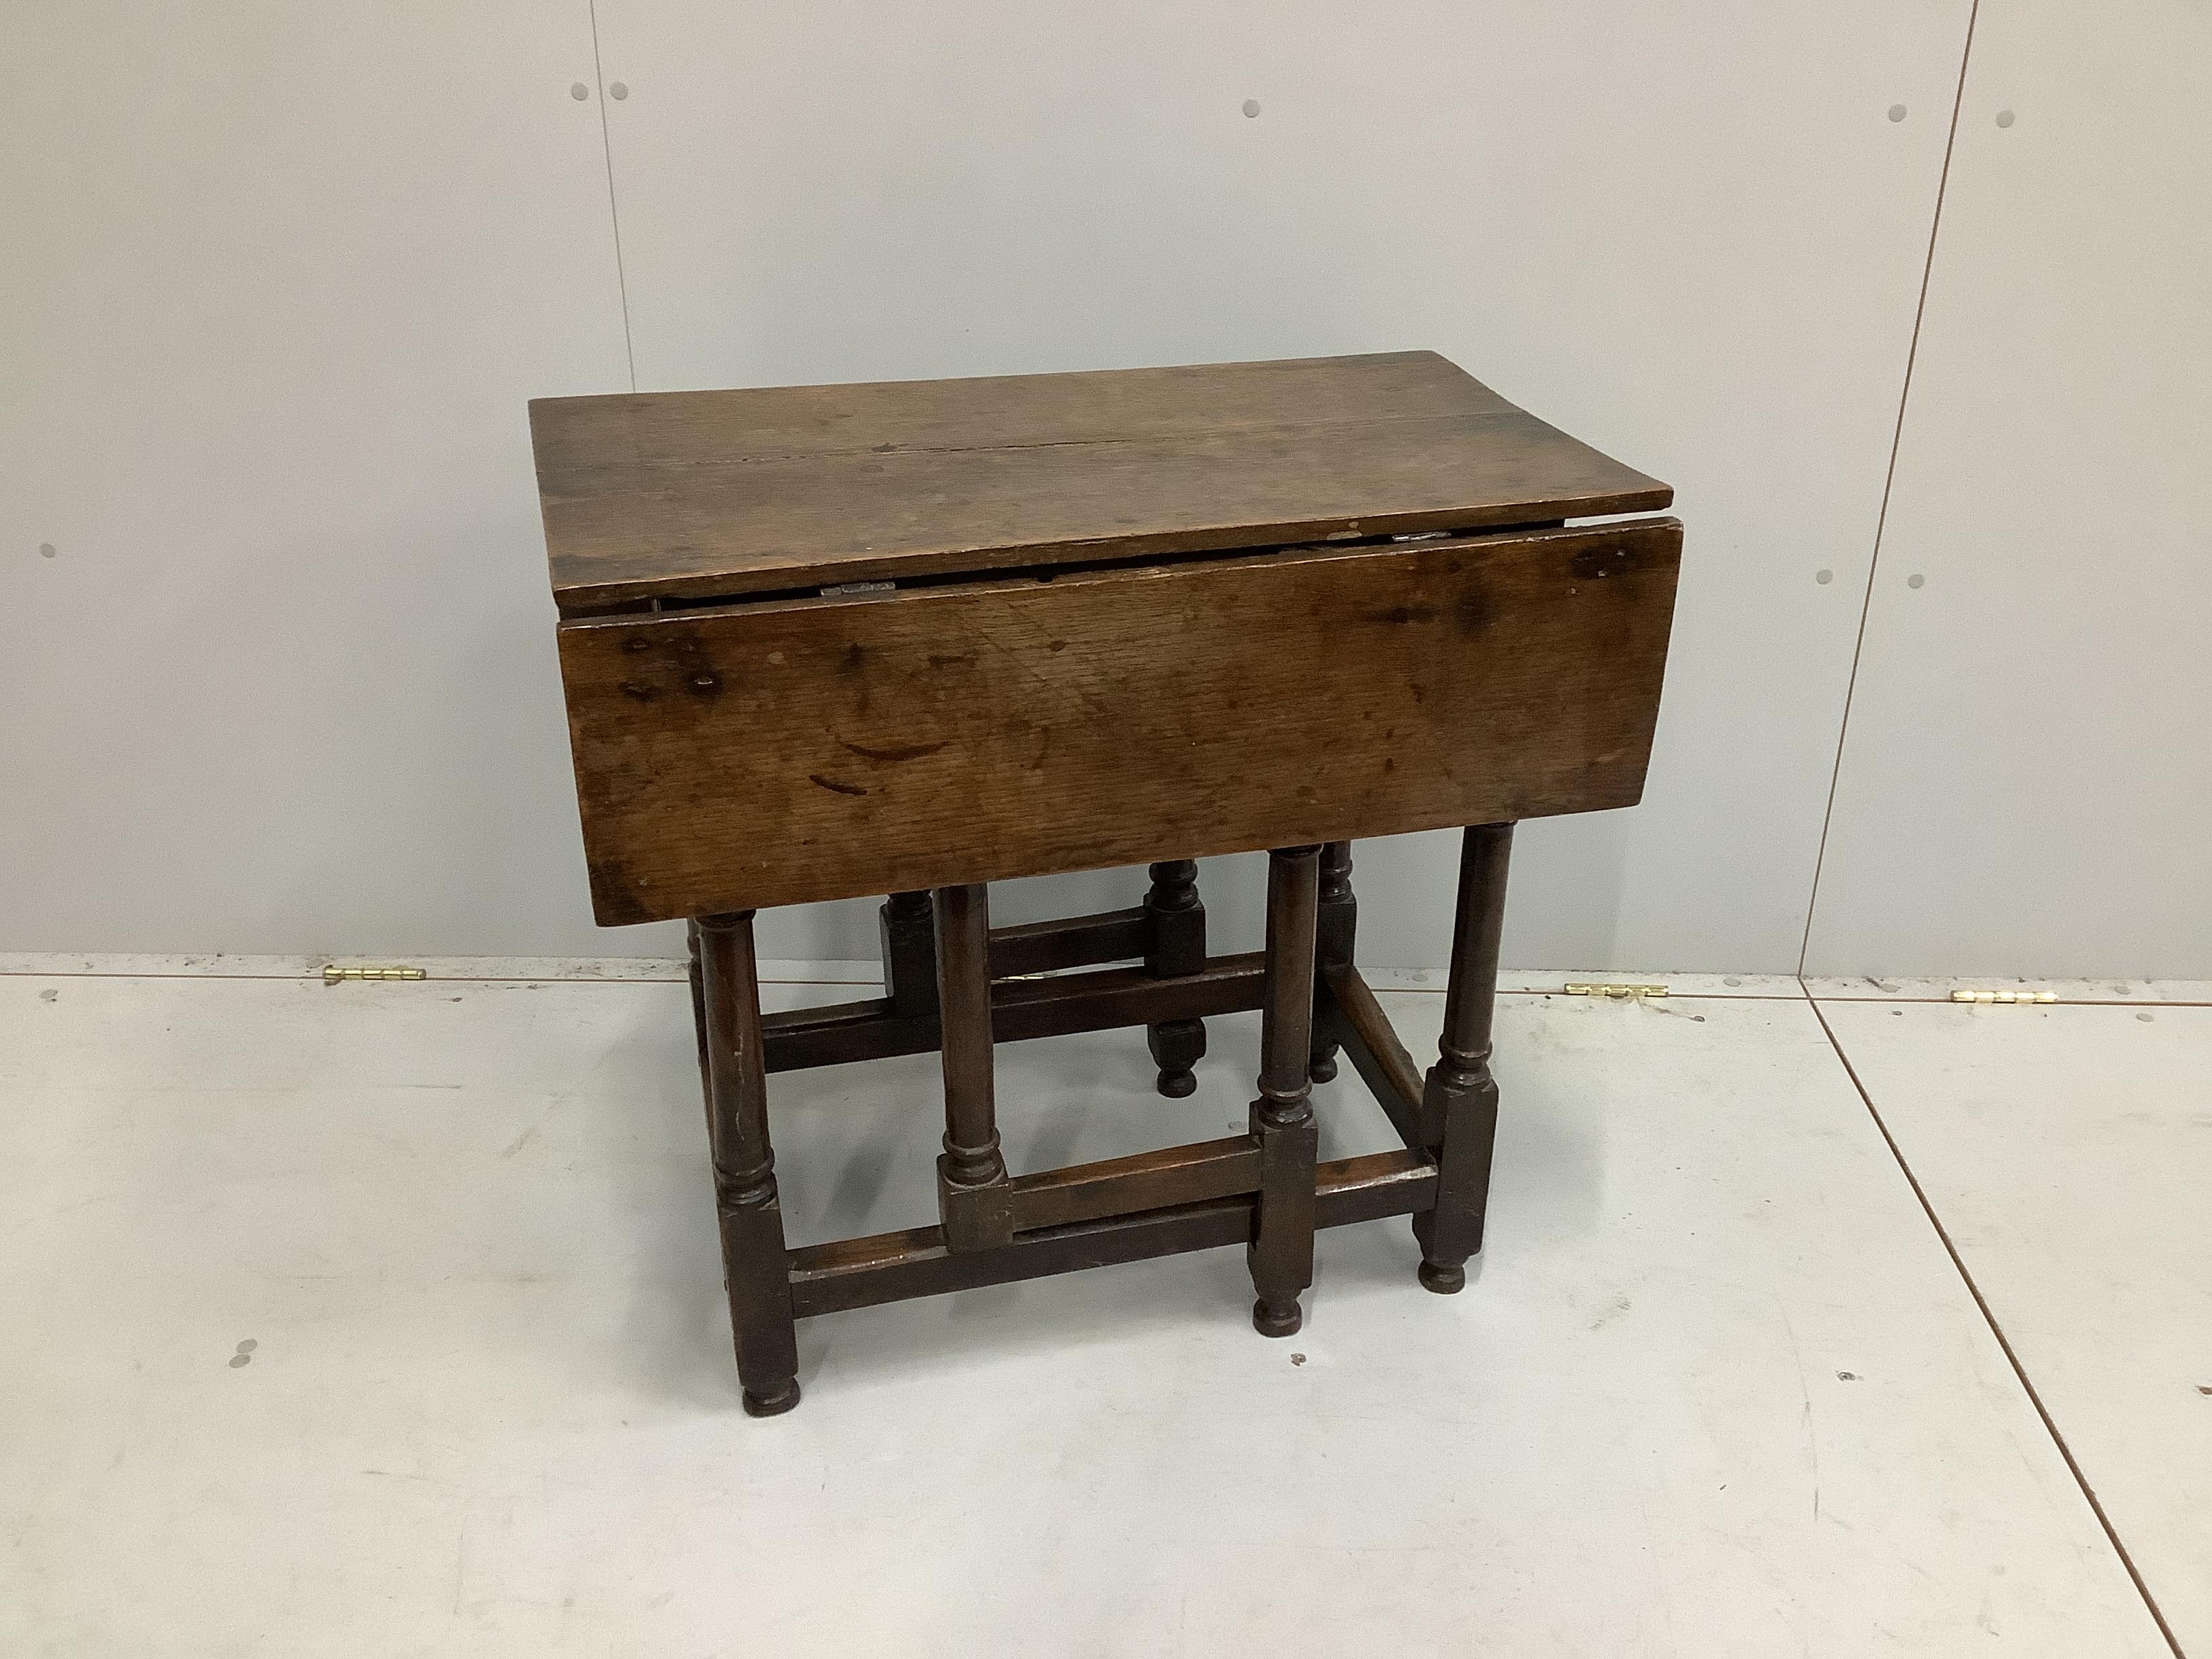 An 18th century oak drop flap table, width 46cm, depth 76cm, height 72cm